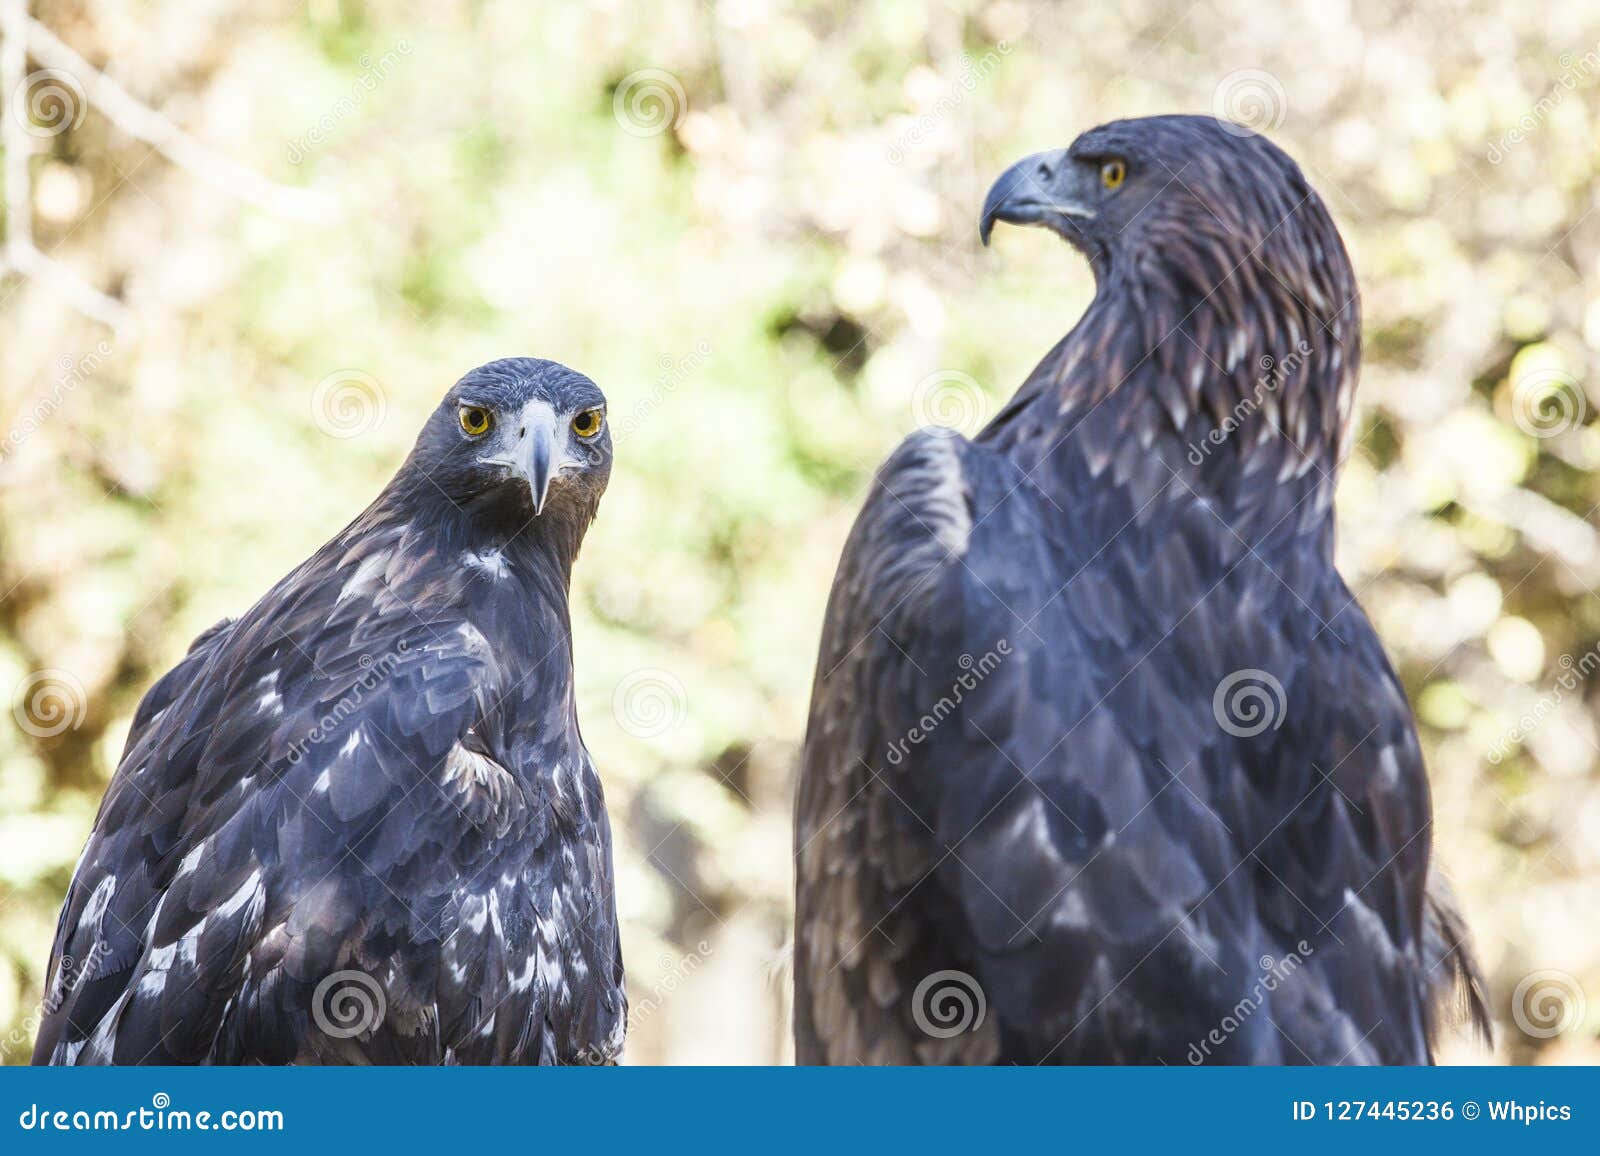 couple of iberian golden eagles or aquila chrysaetos